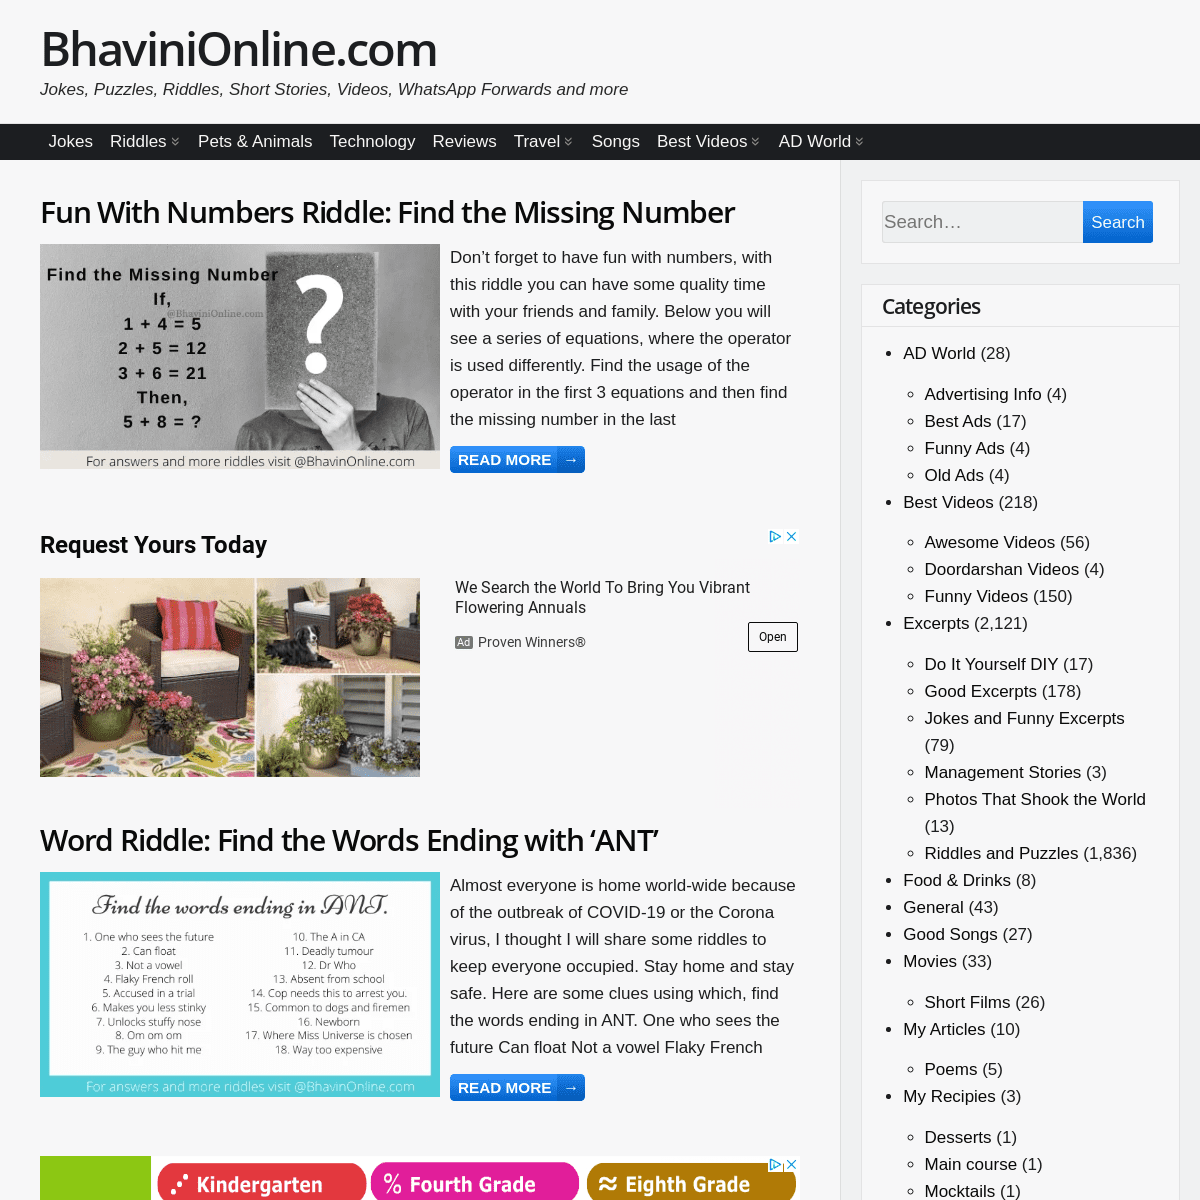 A complete backup of bhavinionline.com